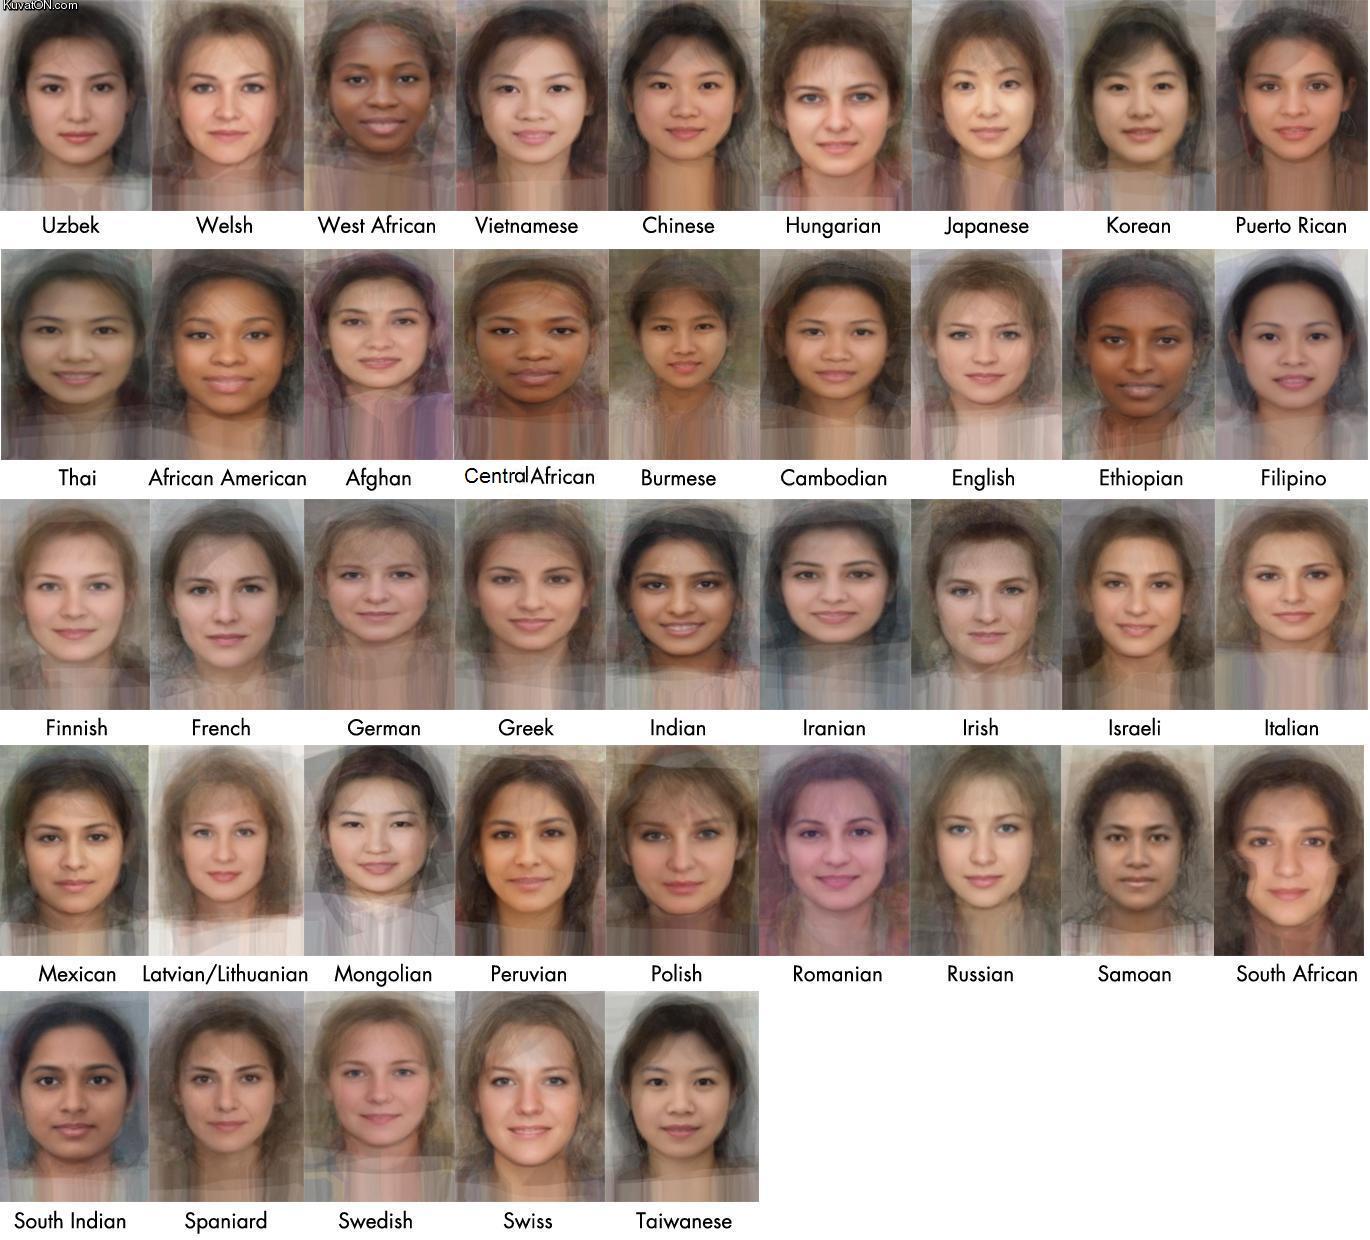 http://4.bp.blogspot.com/_mmBw3uzPnJI/TVCPJRC0orI/AAAAAAAB5l4/qXl6zbWo_0g/s1600/average_face_of_women_across_world_15.jpg